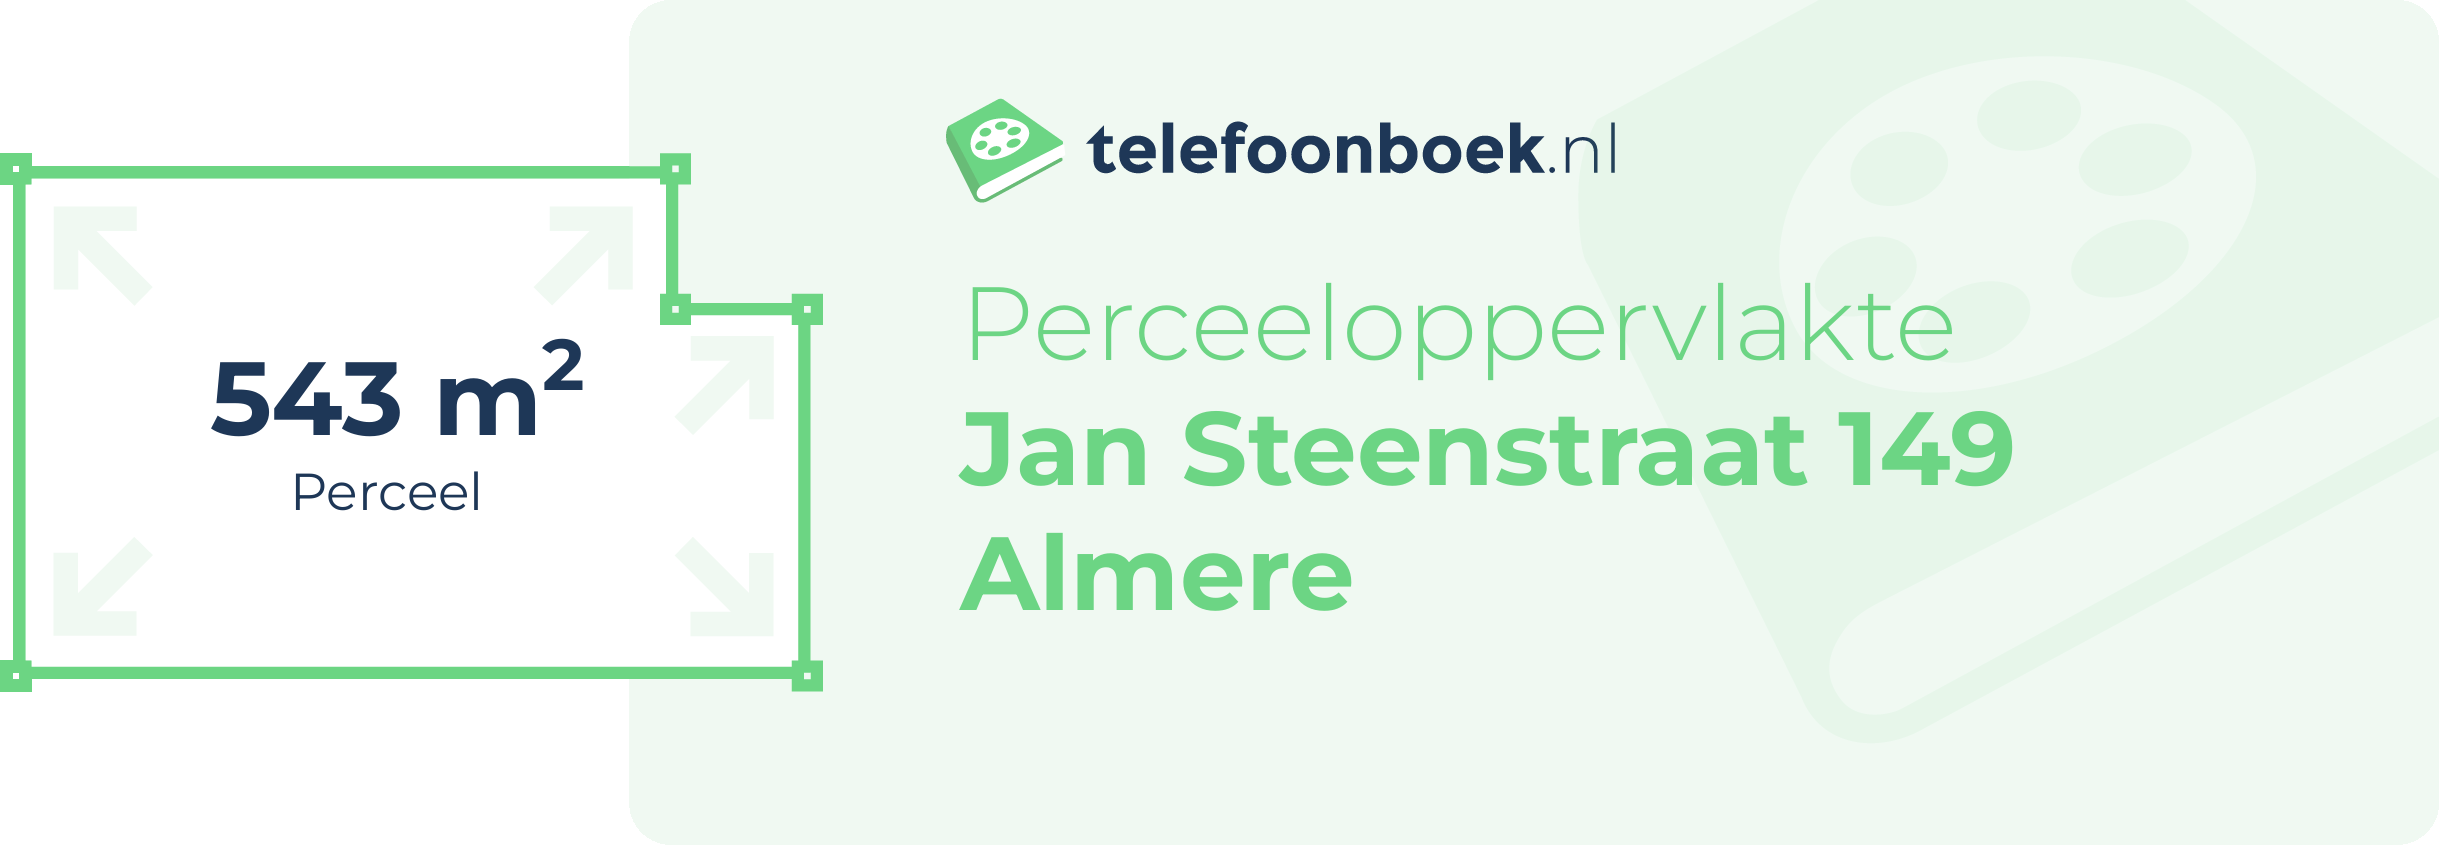 Perceeloppervlakte Jan Steenstraat 149 Almere